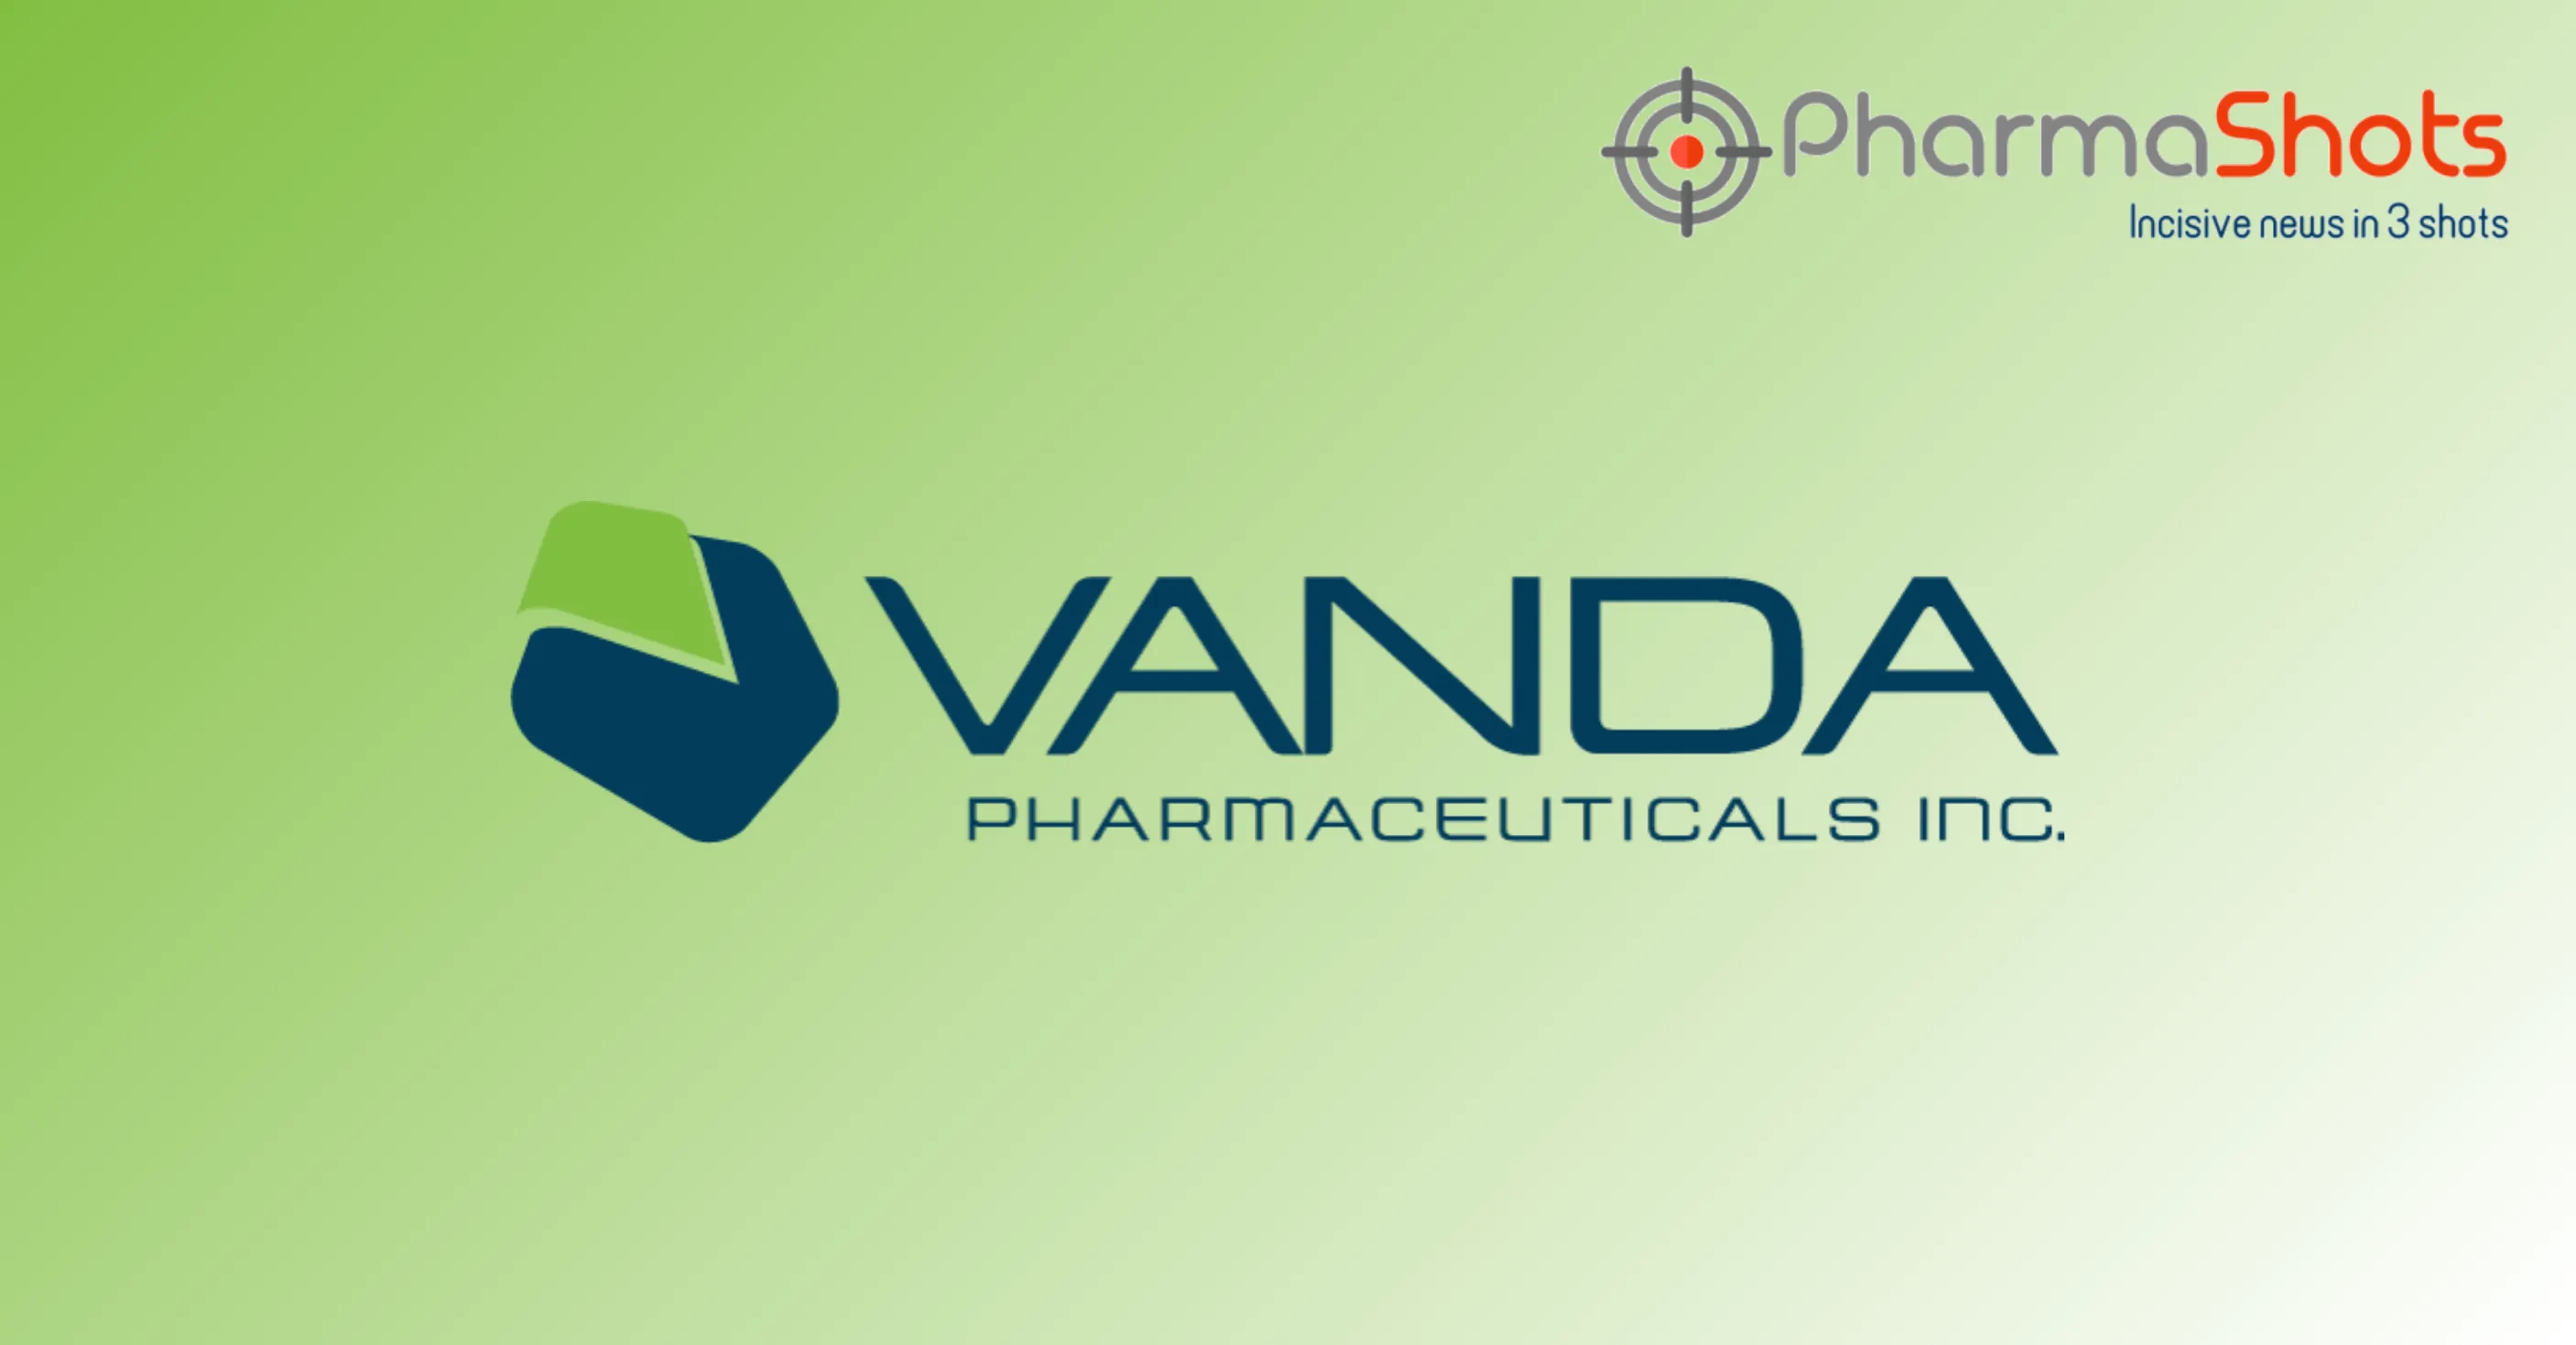 The US FDA Approves Vanda Pharmaceuticals' Fanapt for Treating Bipolar I Disorder